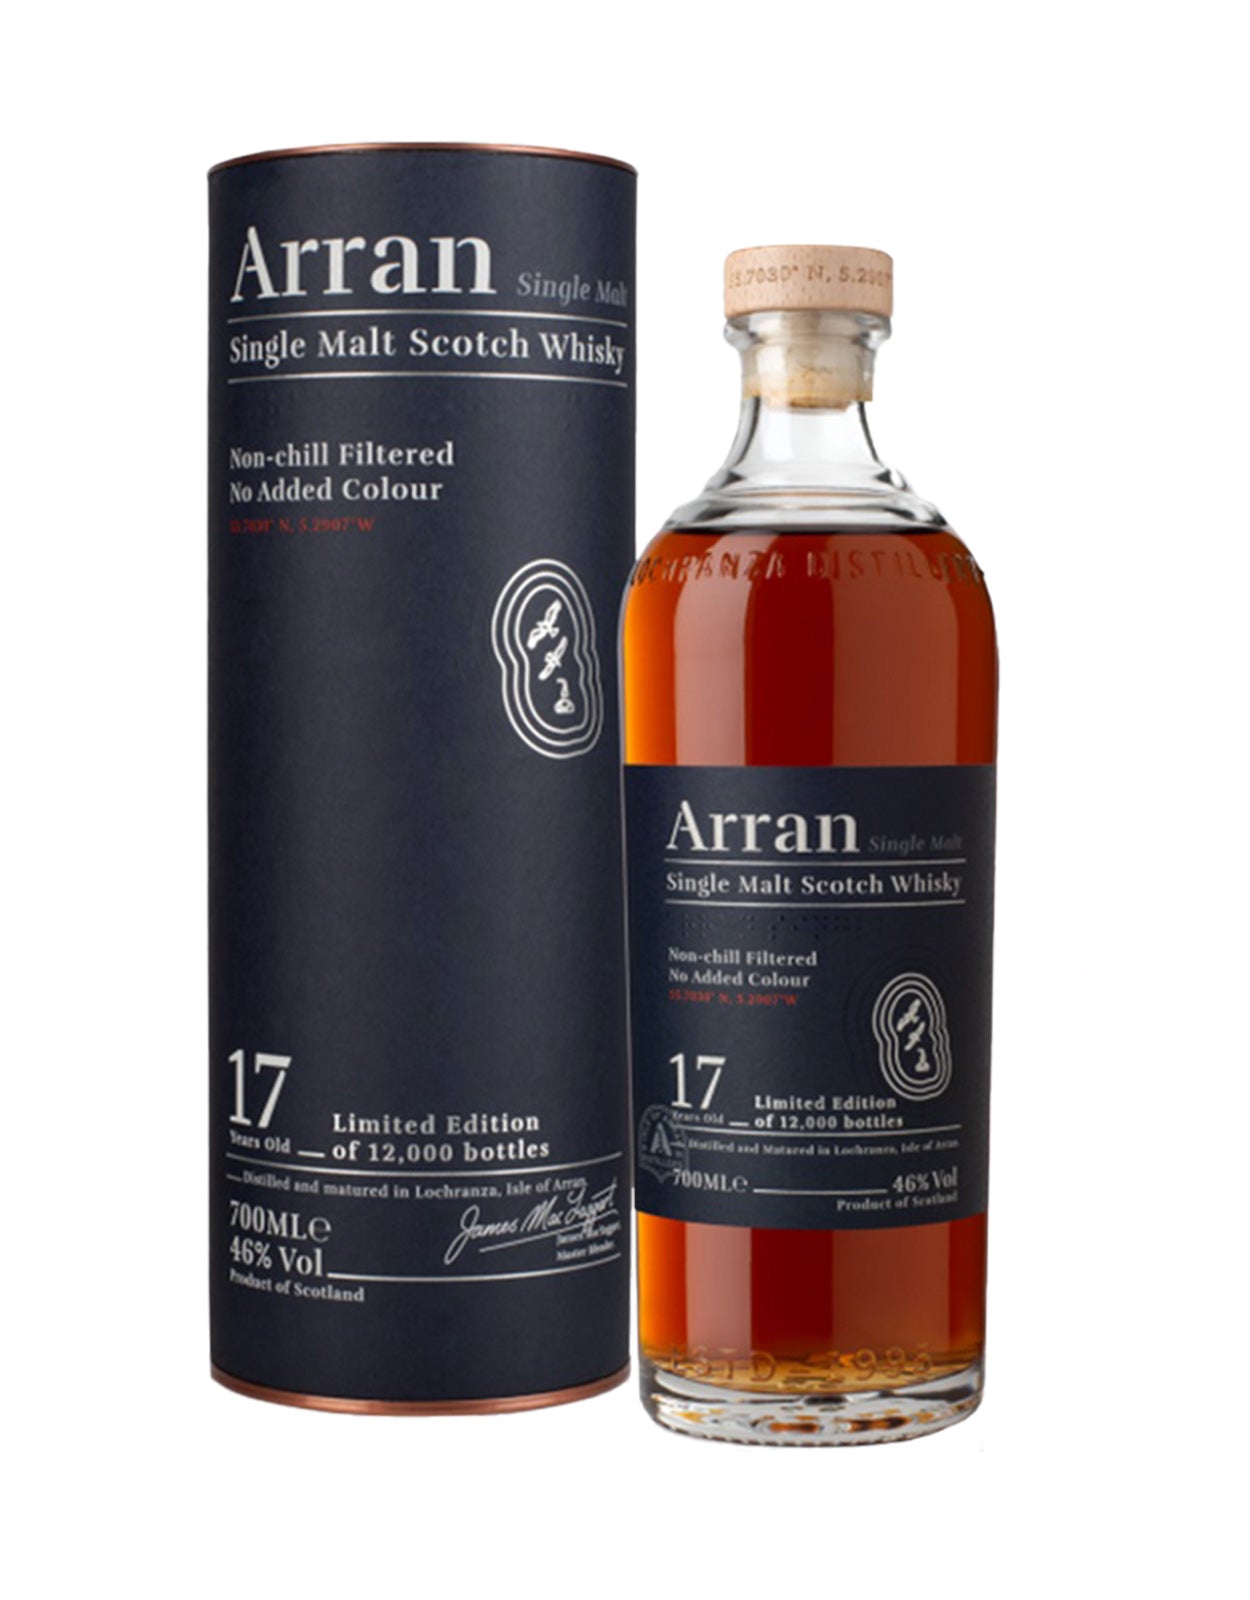 The Arran Single Malt 17 Year Old Limited Edition